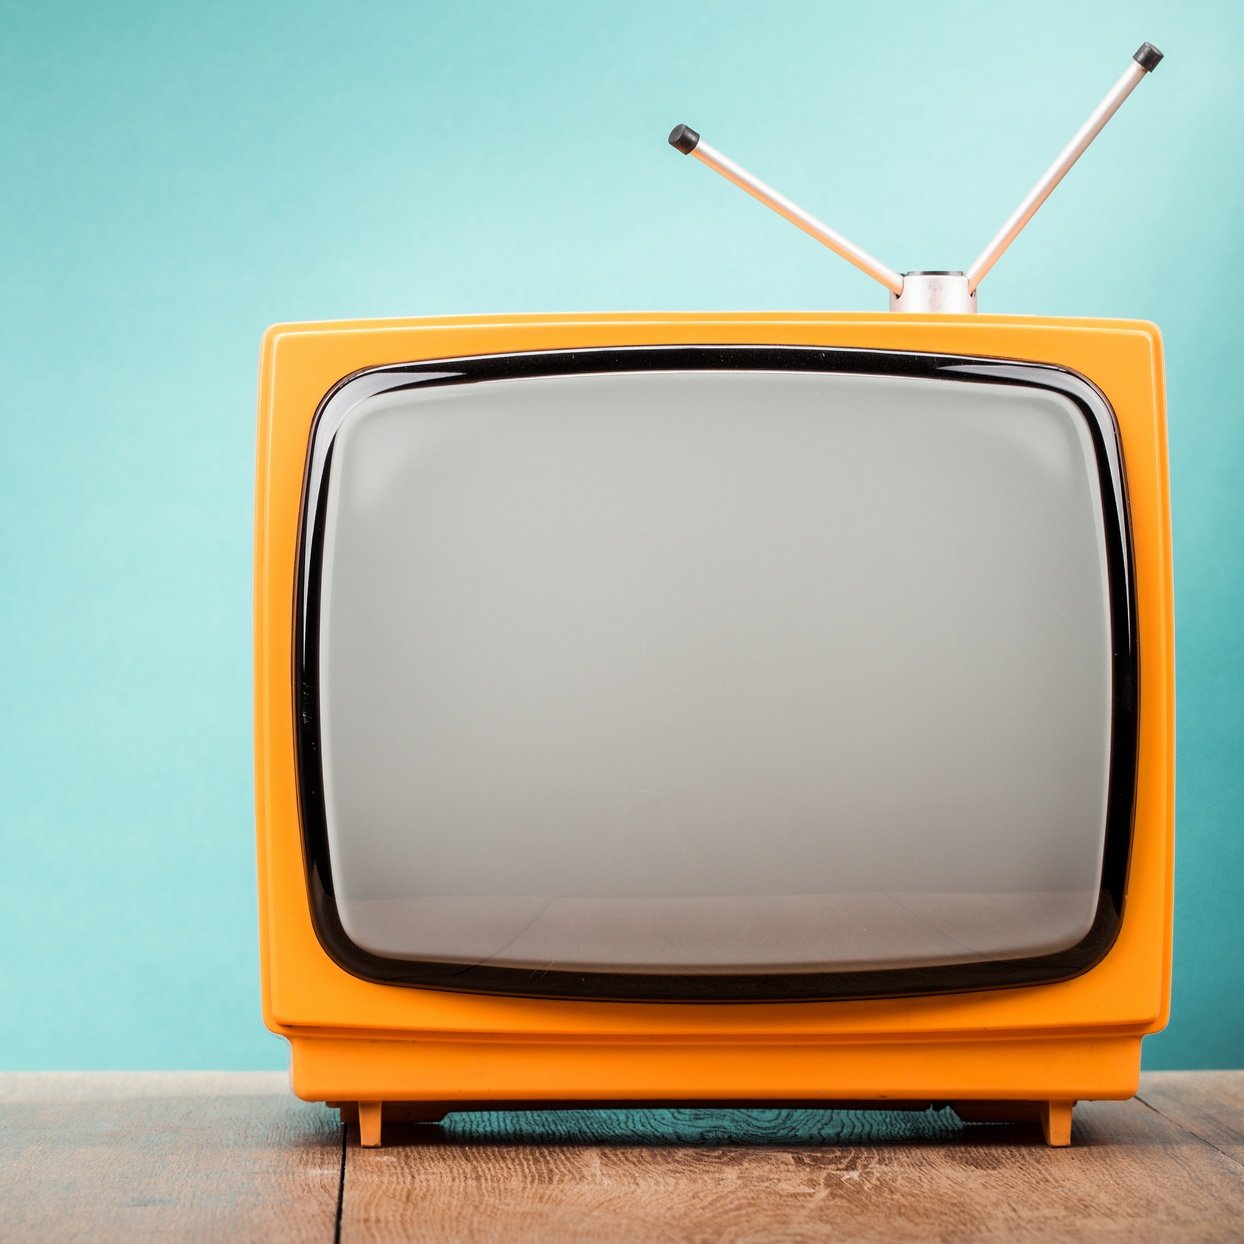 Set your tv. Телевизор. Старый телевизор. Старинный телевизор. Ретро телевизор.